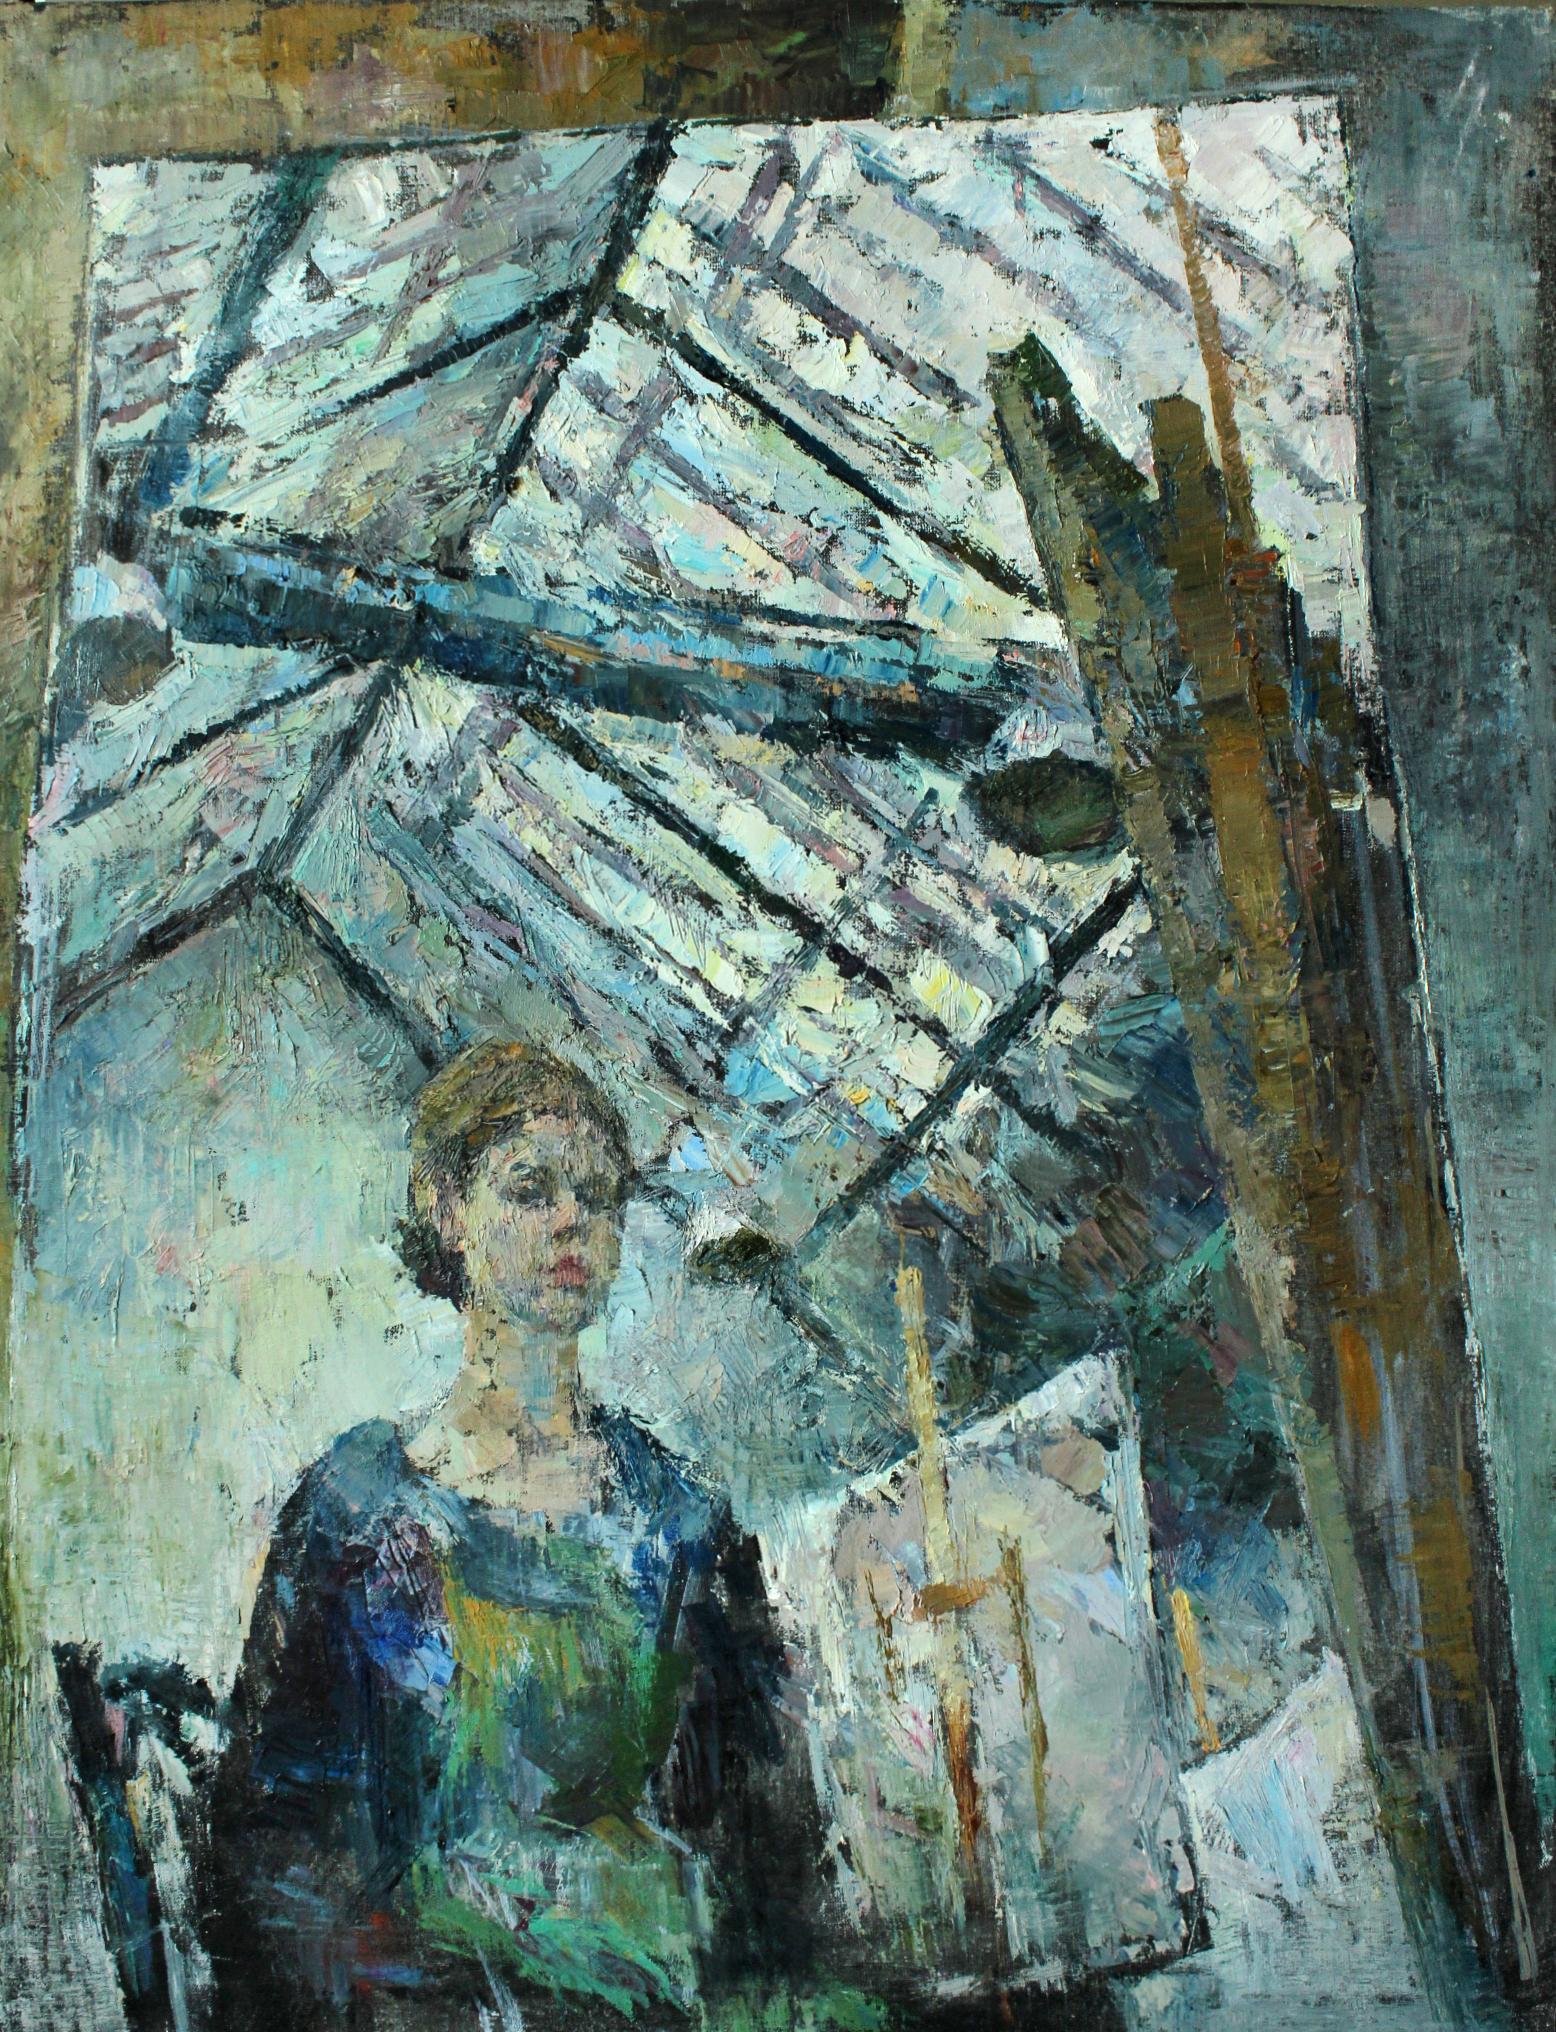 Self-portrait in the glass workshop. Original modern art painting